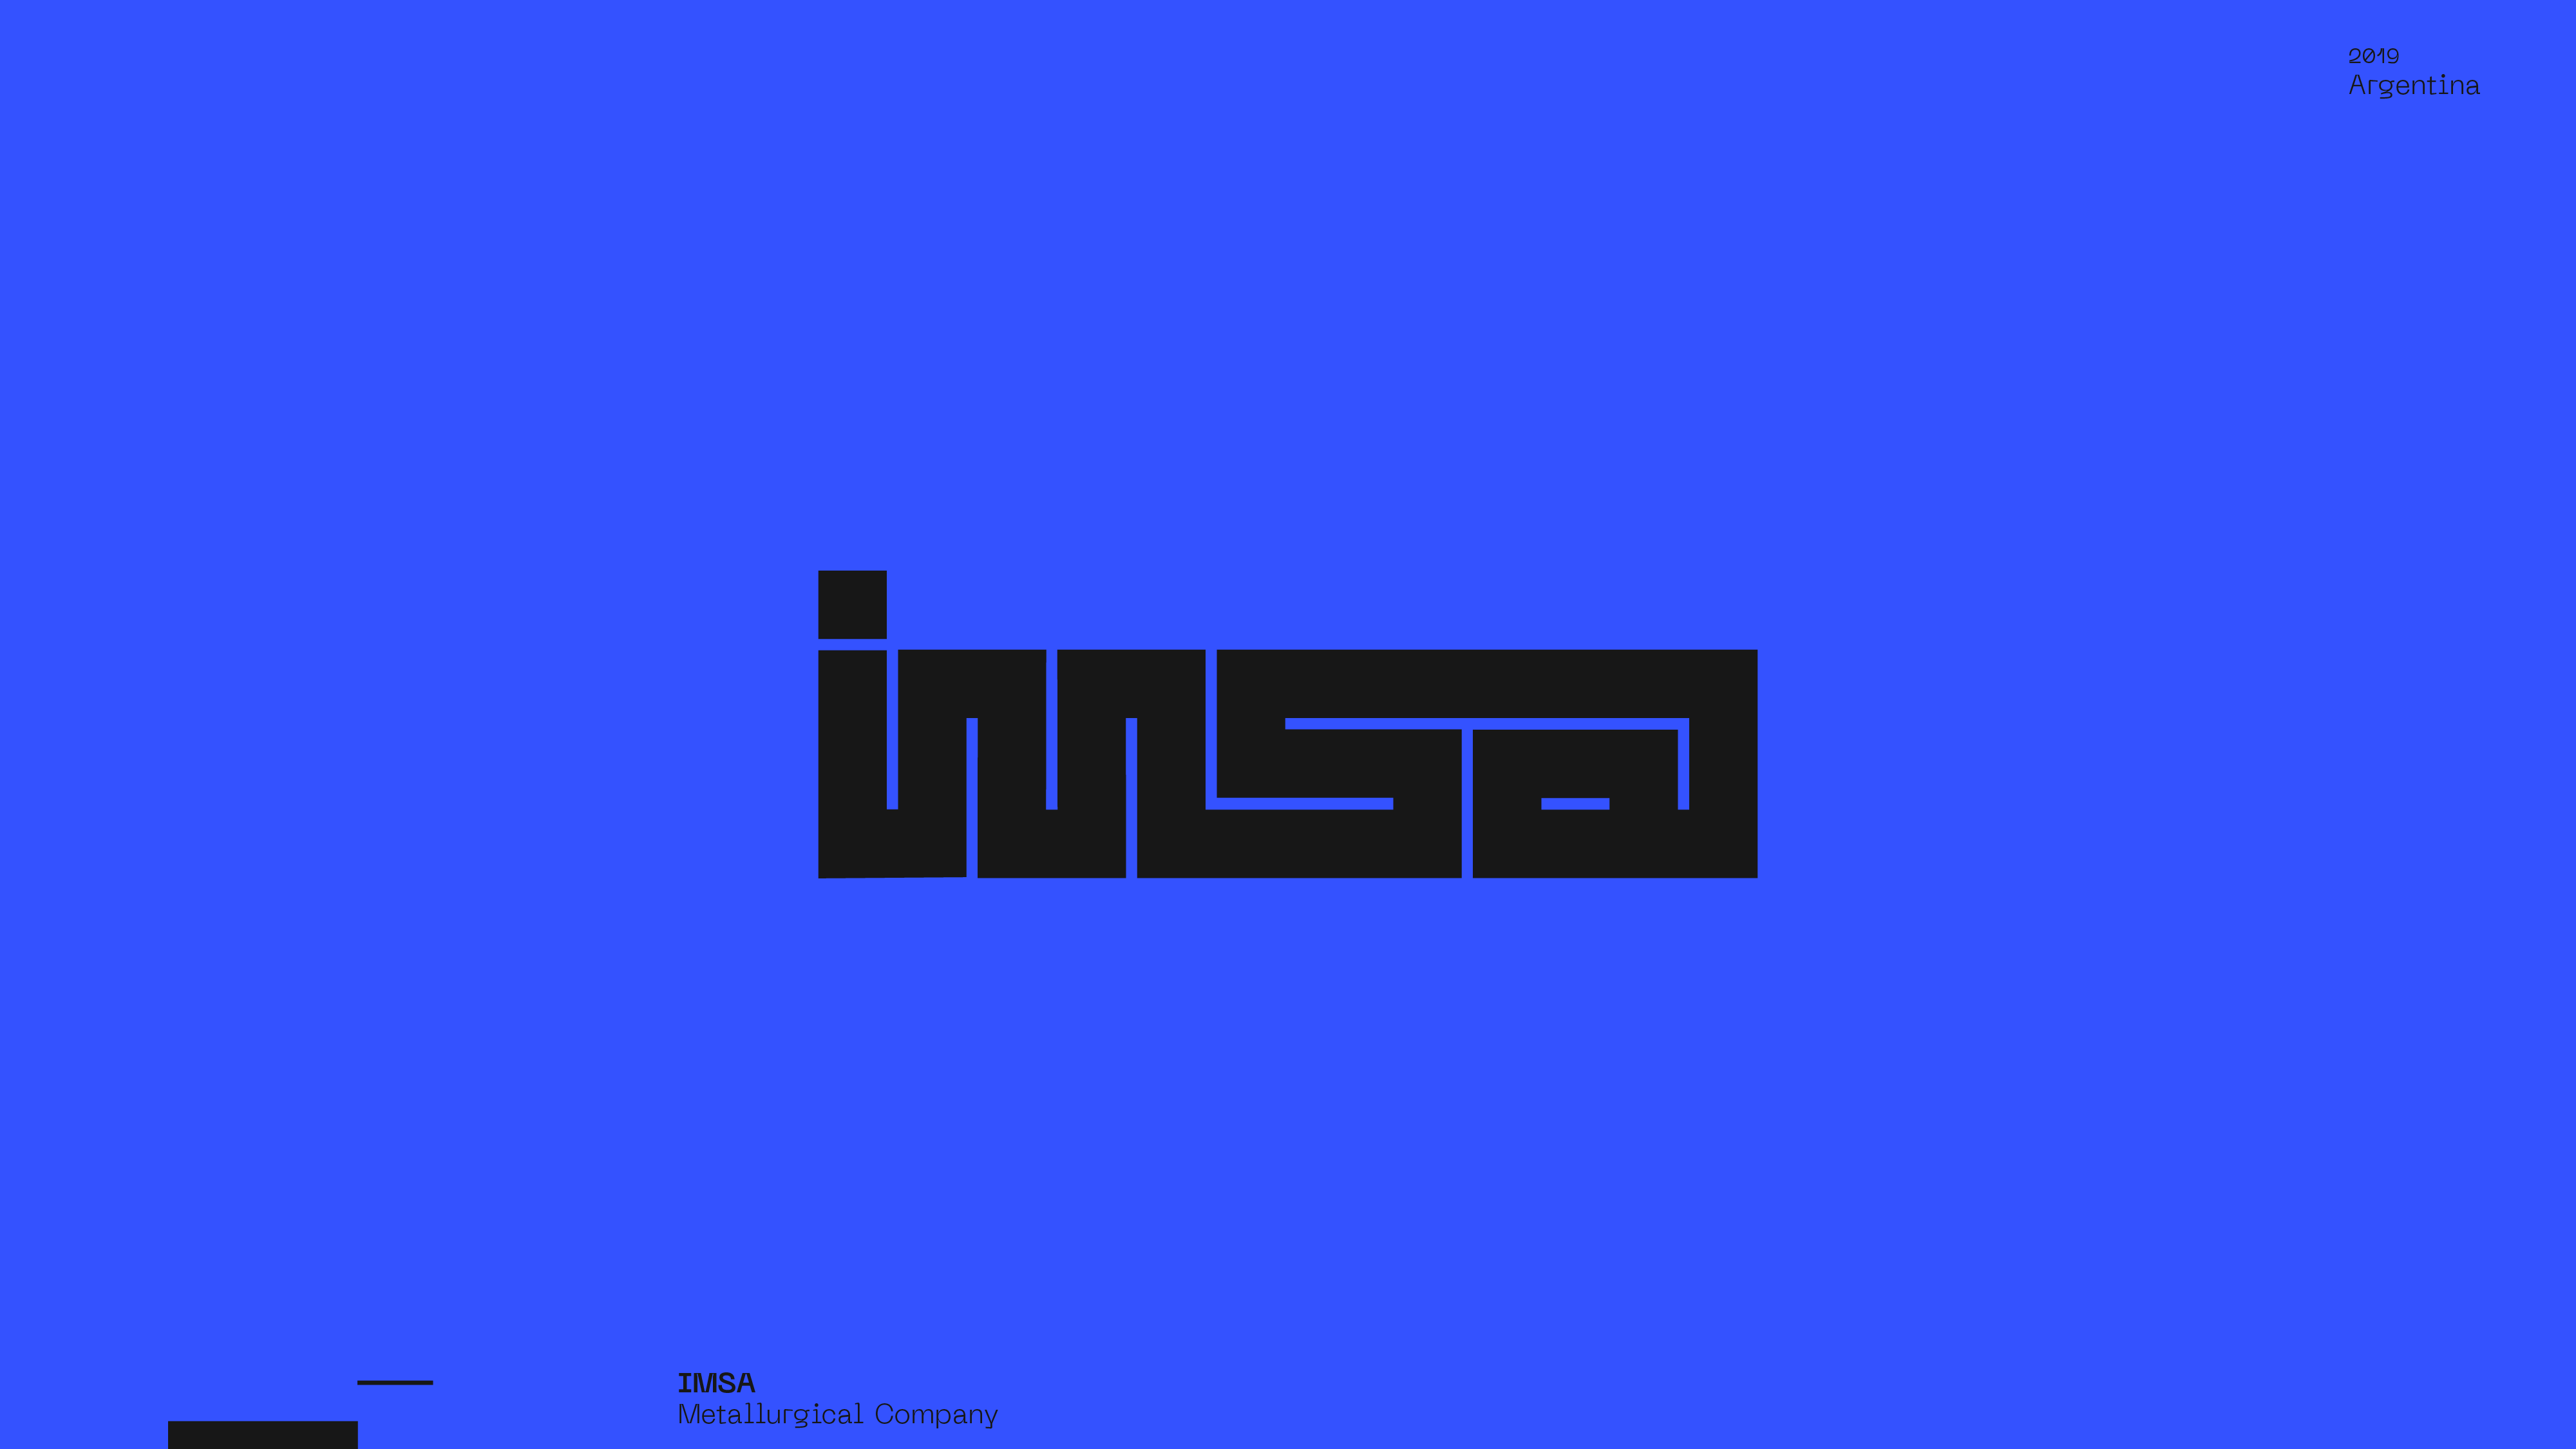 Guapo Design Studio by Esteban Ibarra Logofolio 2019 logo designer — IMSA